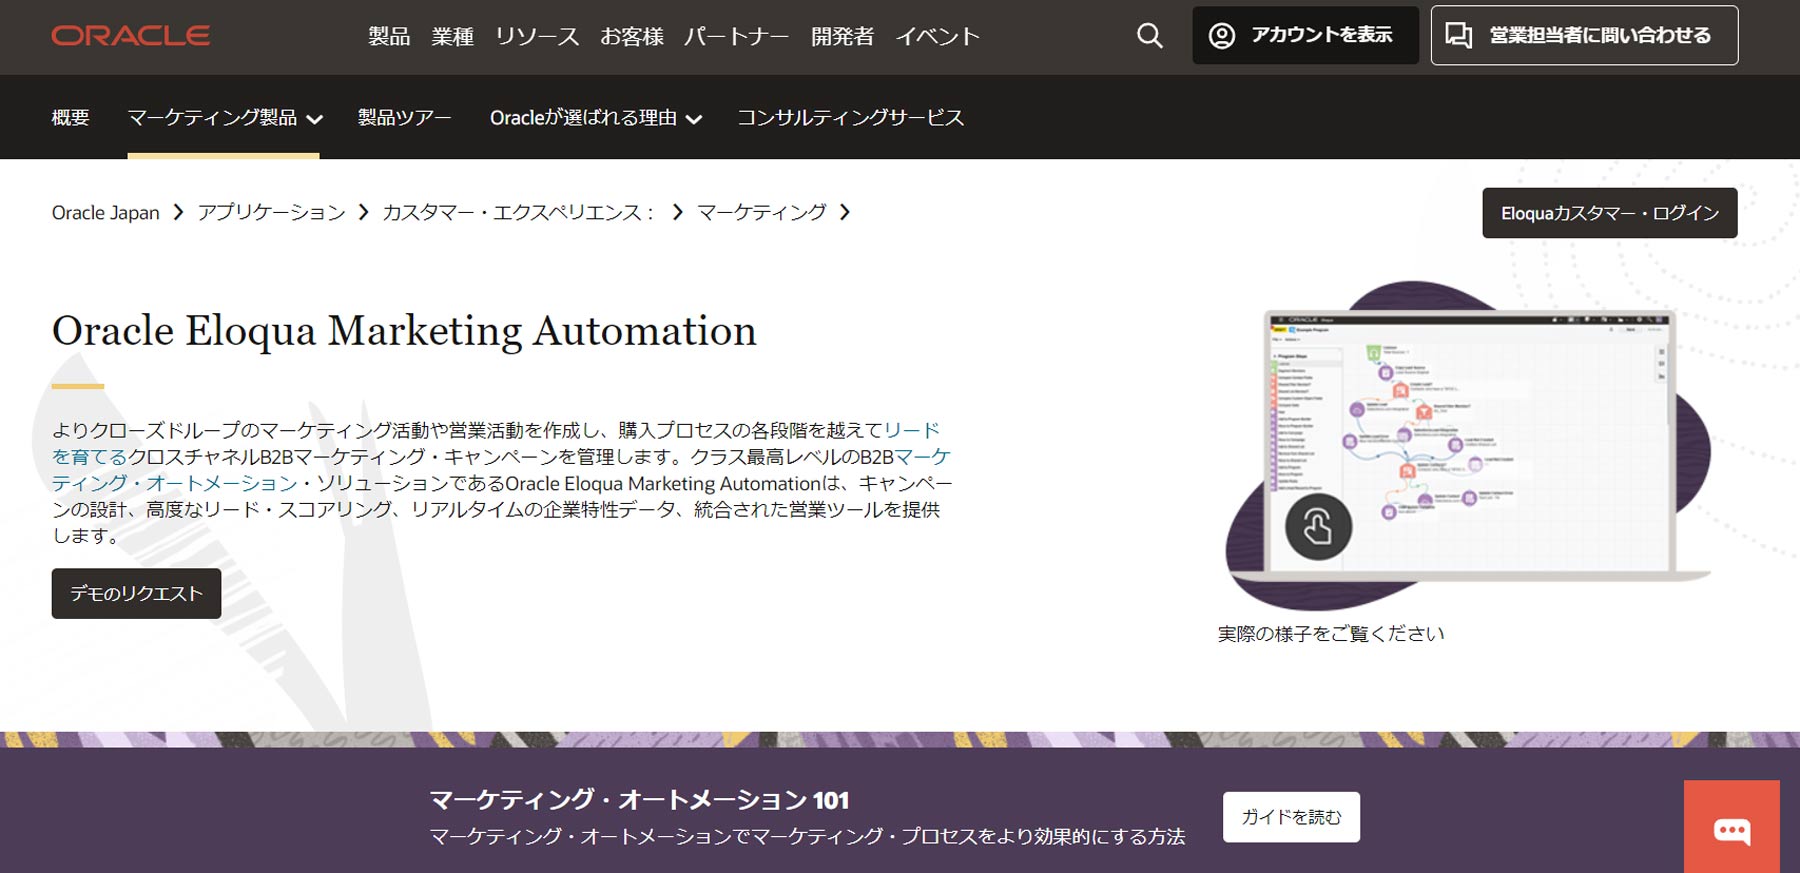 Oracle Eloqua Marketing Automation公式Webサイト